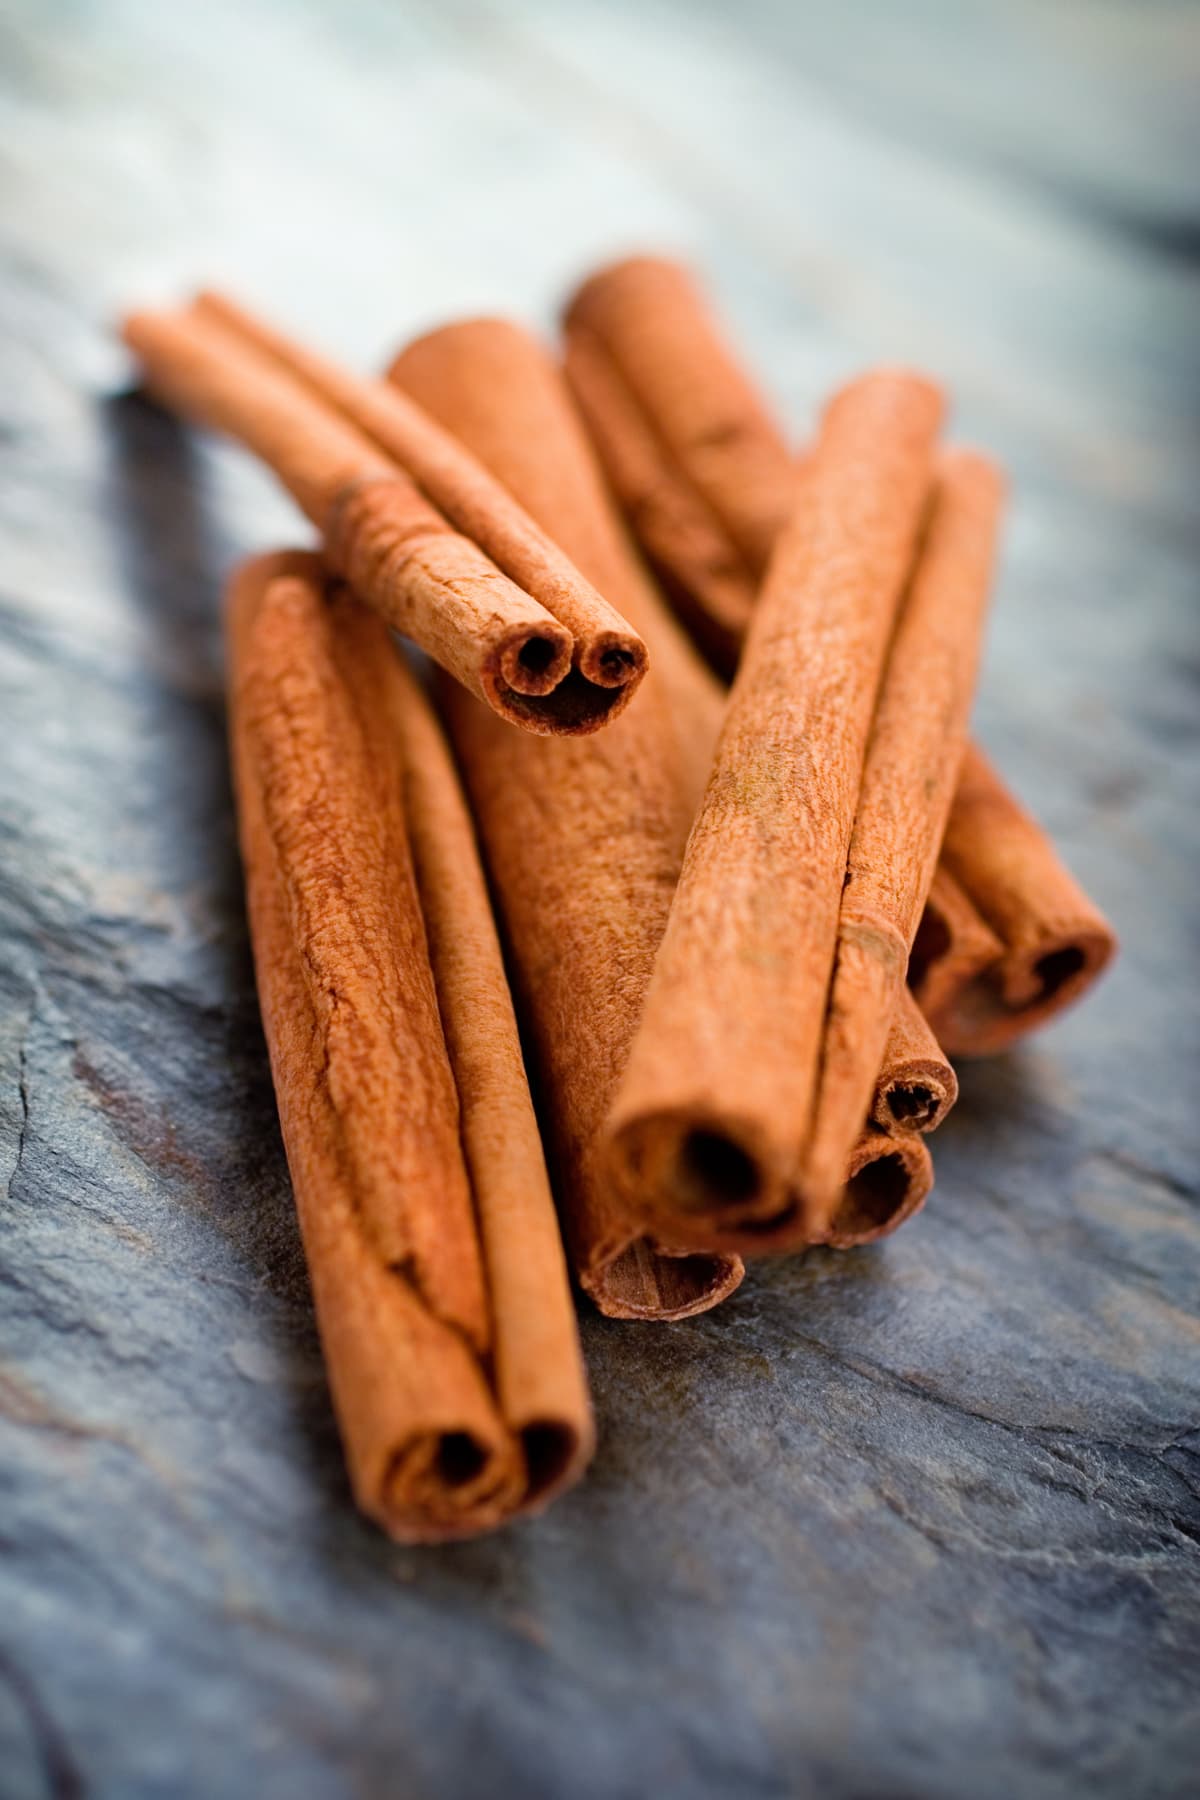 Small sticks of cinnamon bark